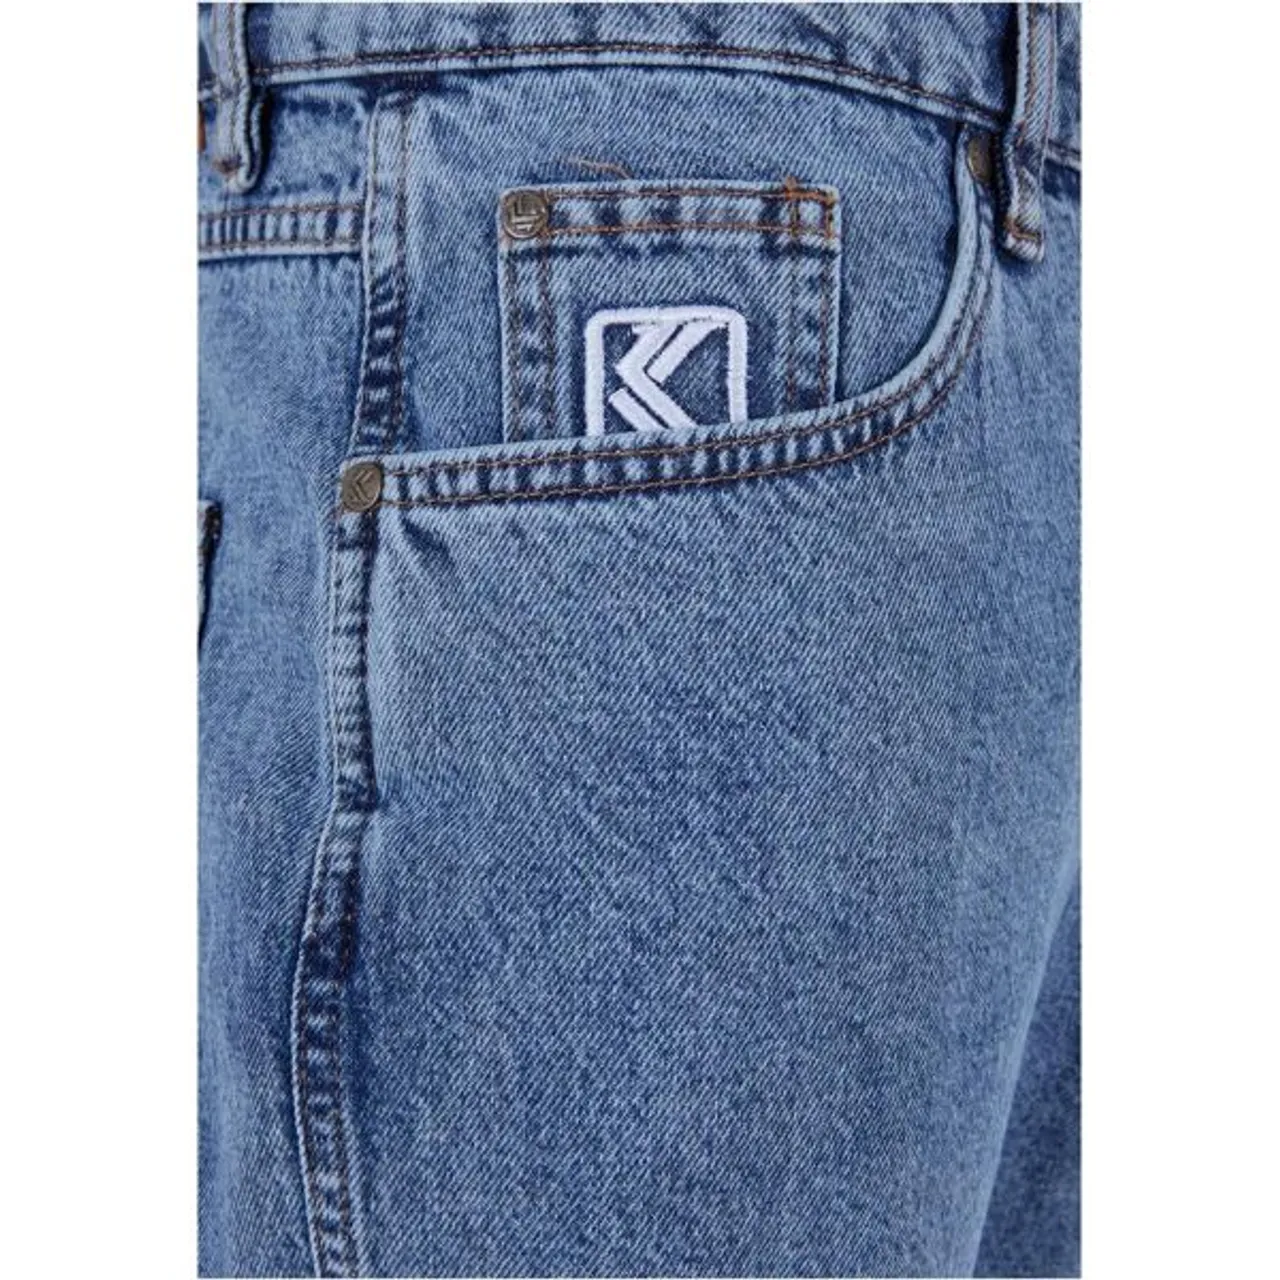 Bequeme Jeans KARL KANI "Karl Kani Herren" Gr. 32, Normalgrößen, vintage mid blue Herren Jeans